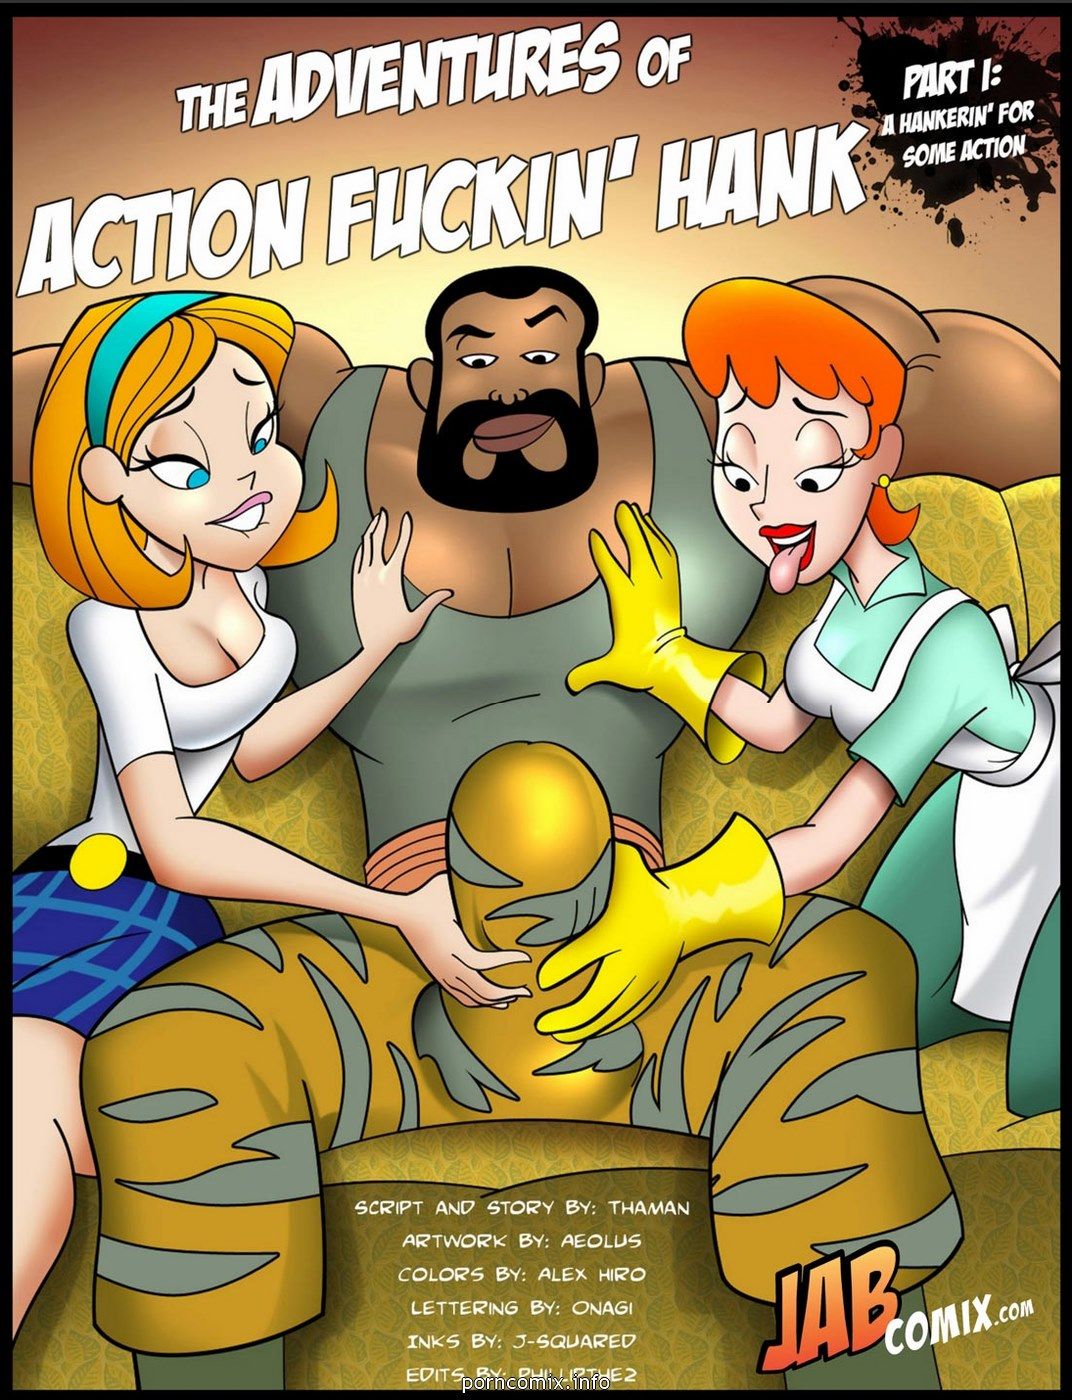 Adventures of Action Fuckin' Hank - Jab page 1